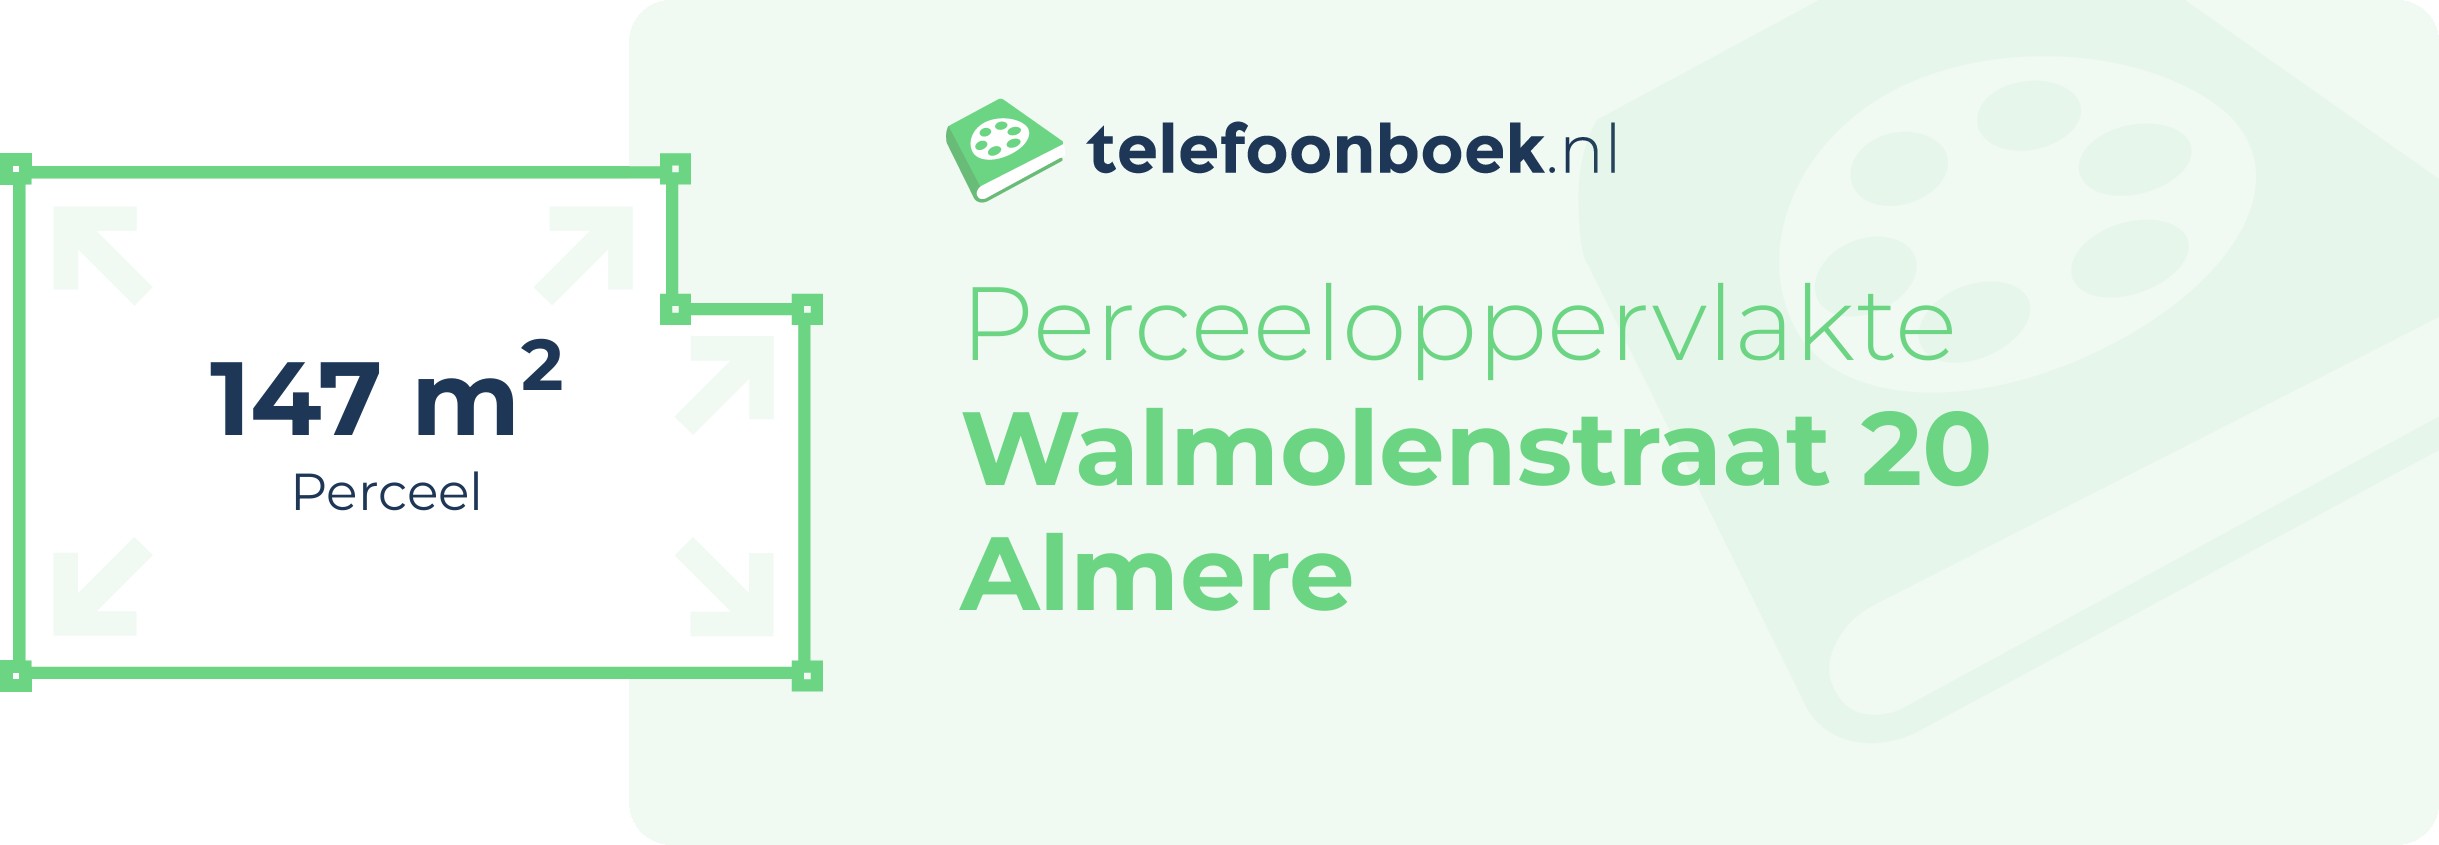 Perceeloppervlakte Walmolenstraat 20 Almere